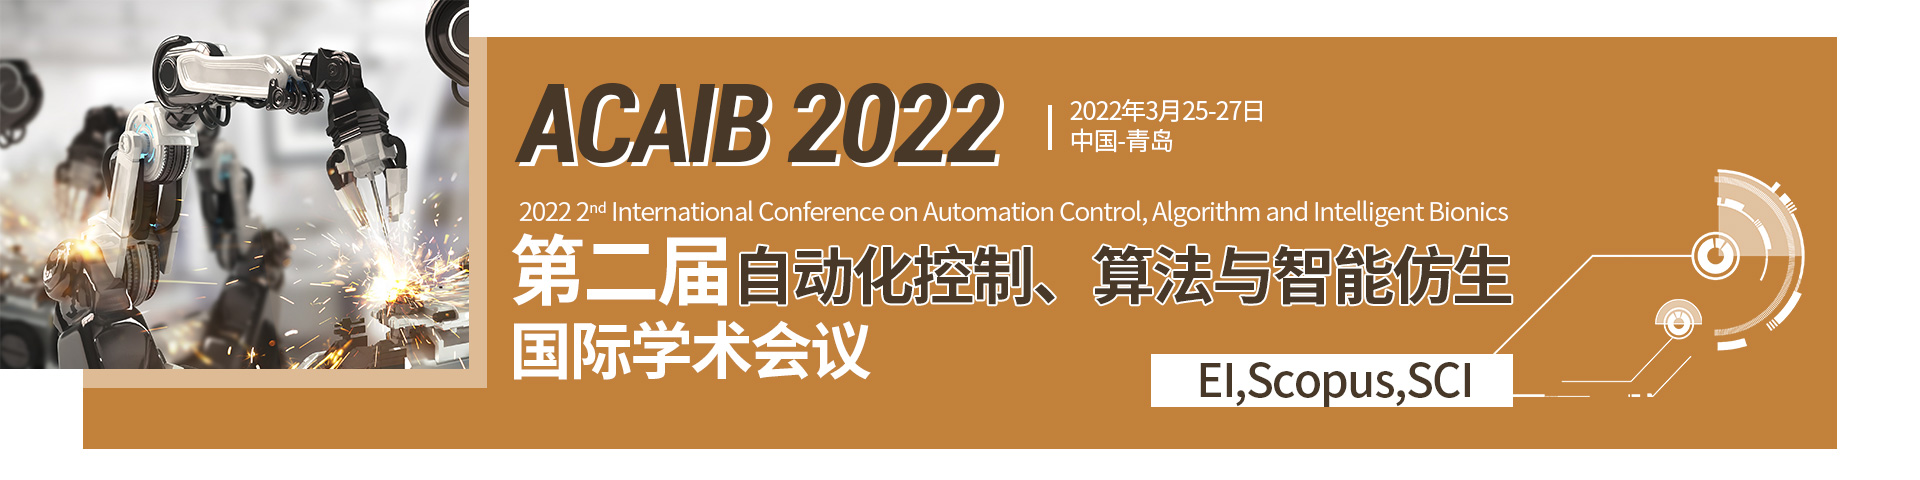 3月青岛-ACAIB2022-会议艾思banner-张寅婕-20210812.jpg